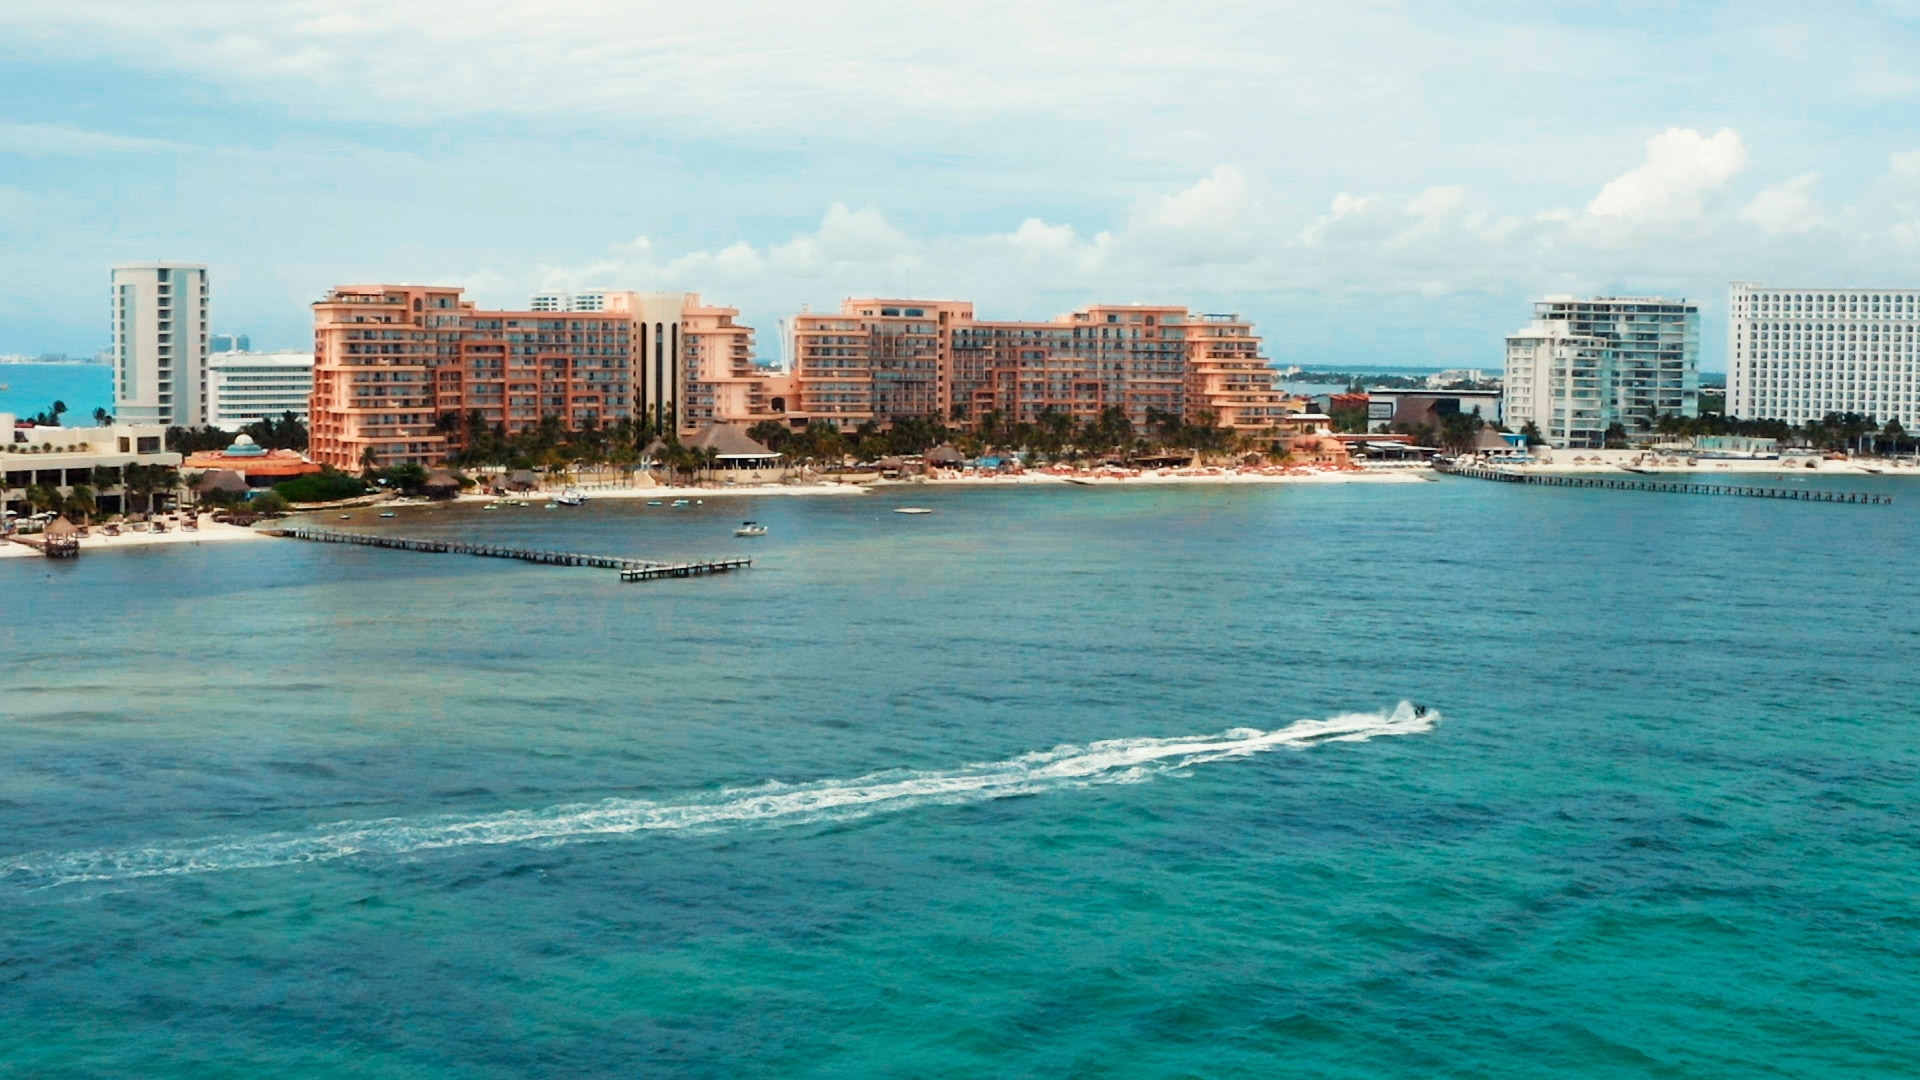 Vista aérea de la costa de Cancún